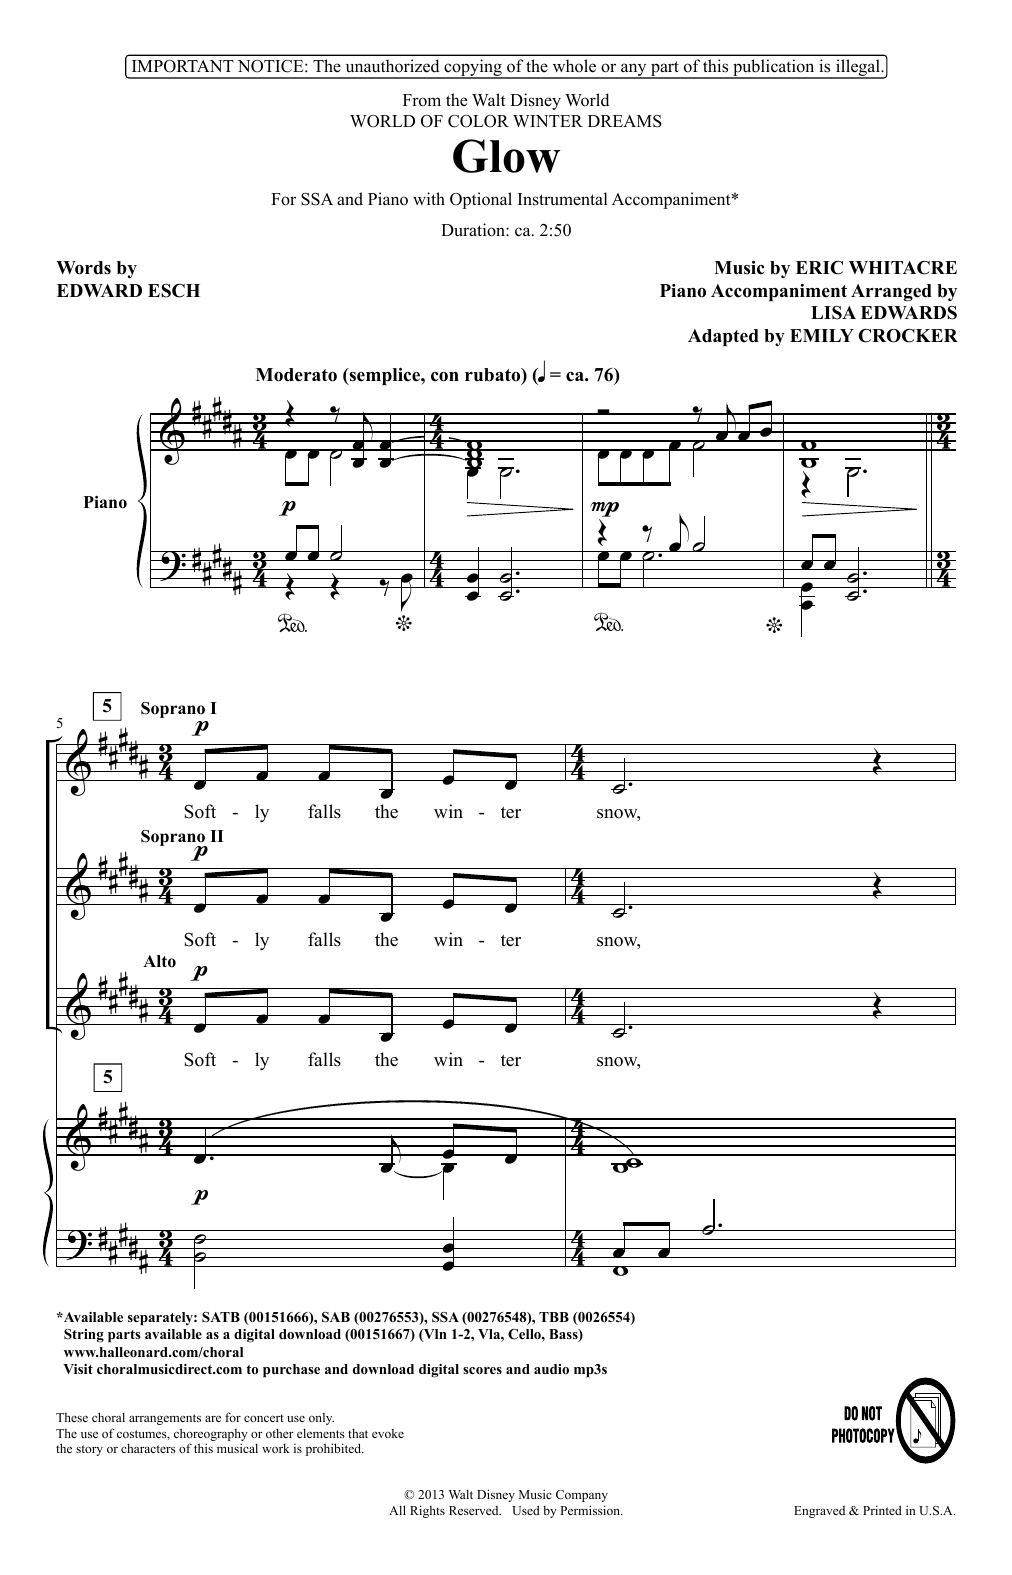 Eric Whitacre Glow (arr. Emily Crocker) Sheet Music Notes & Chords for SAB Choir - Download or Print PDF